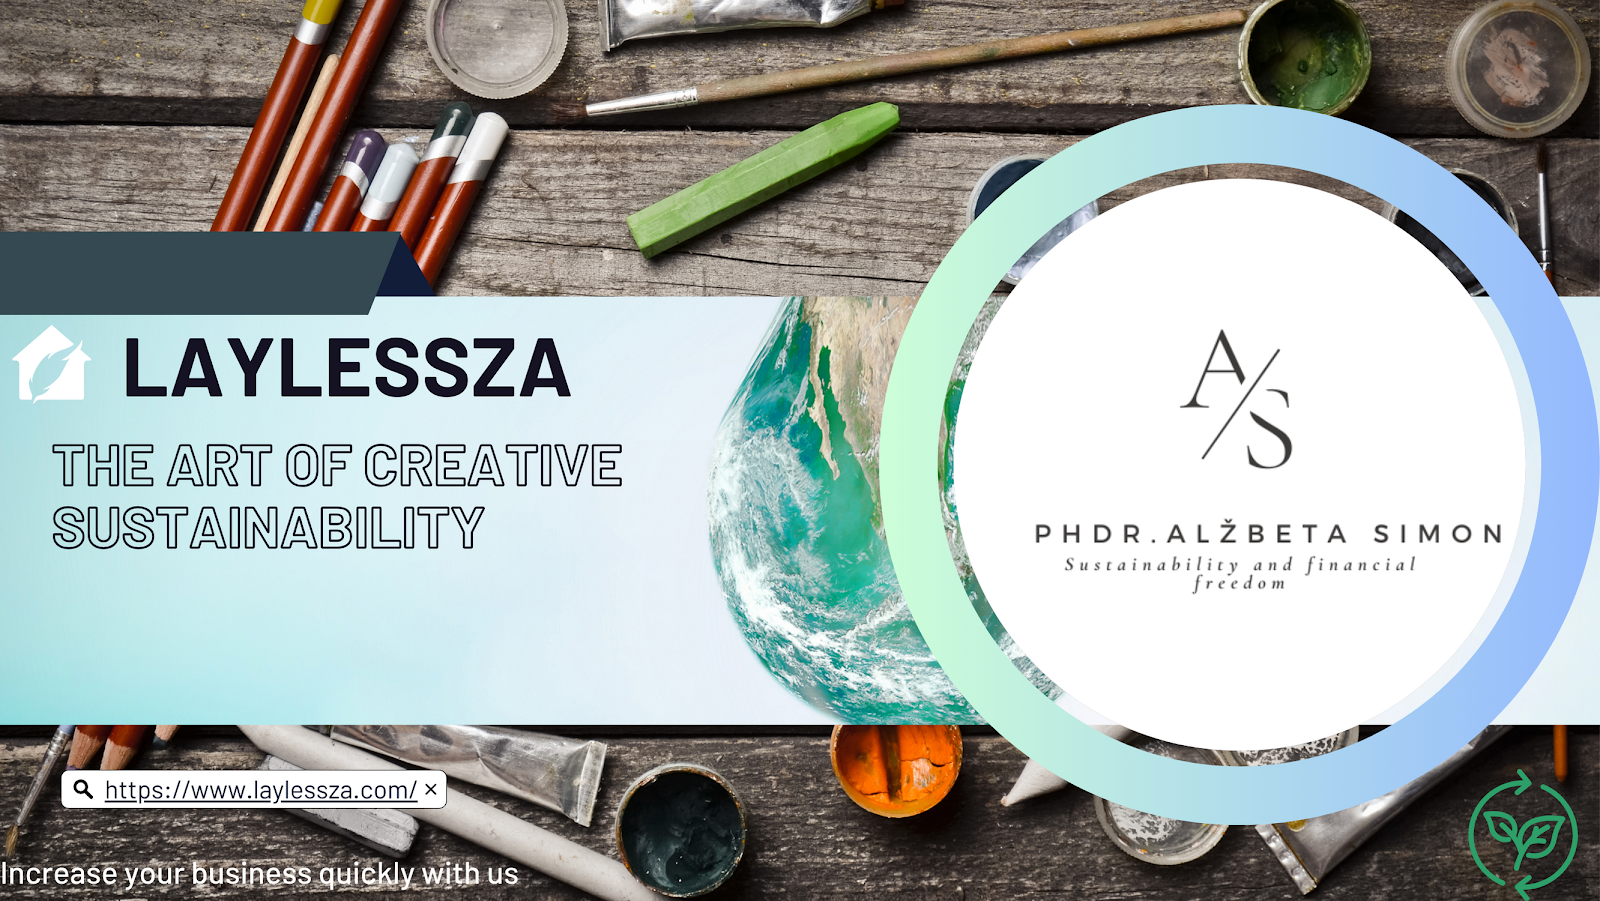 Laylessza, the art of creative sustainability